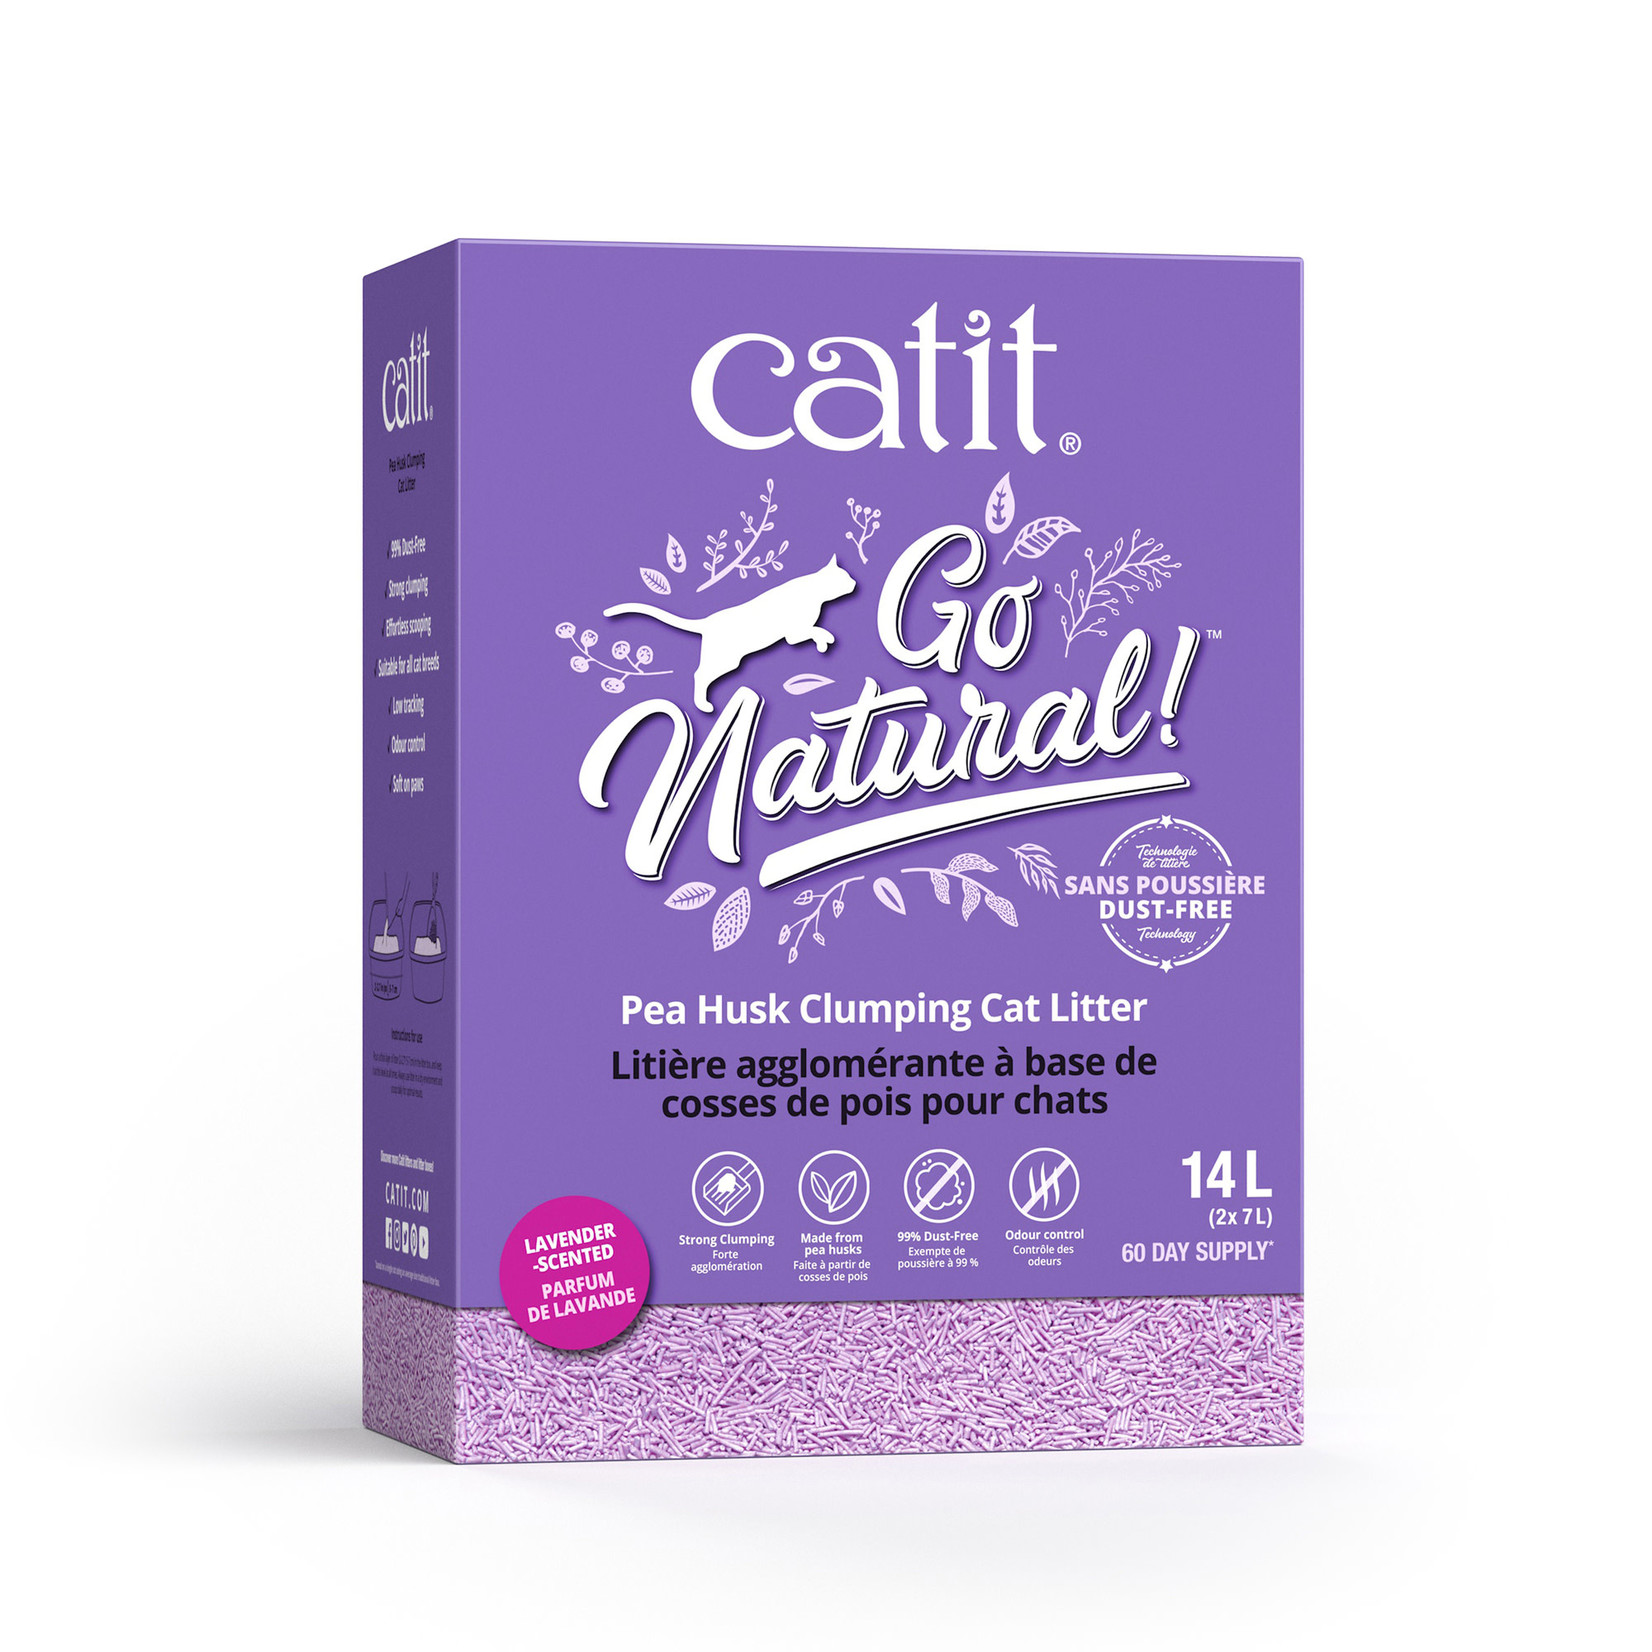 CAT IT (W) Catit Go Natural! Pea Husk Clumping Cat Litter - Lavender - 14 L box